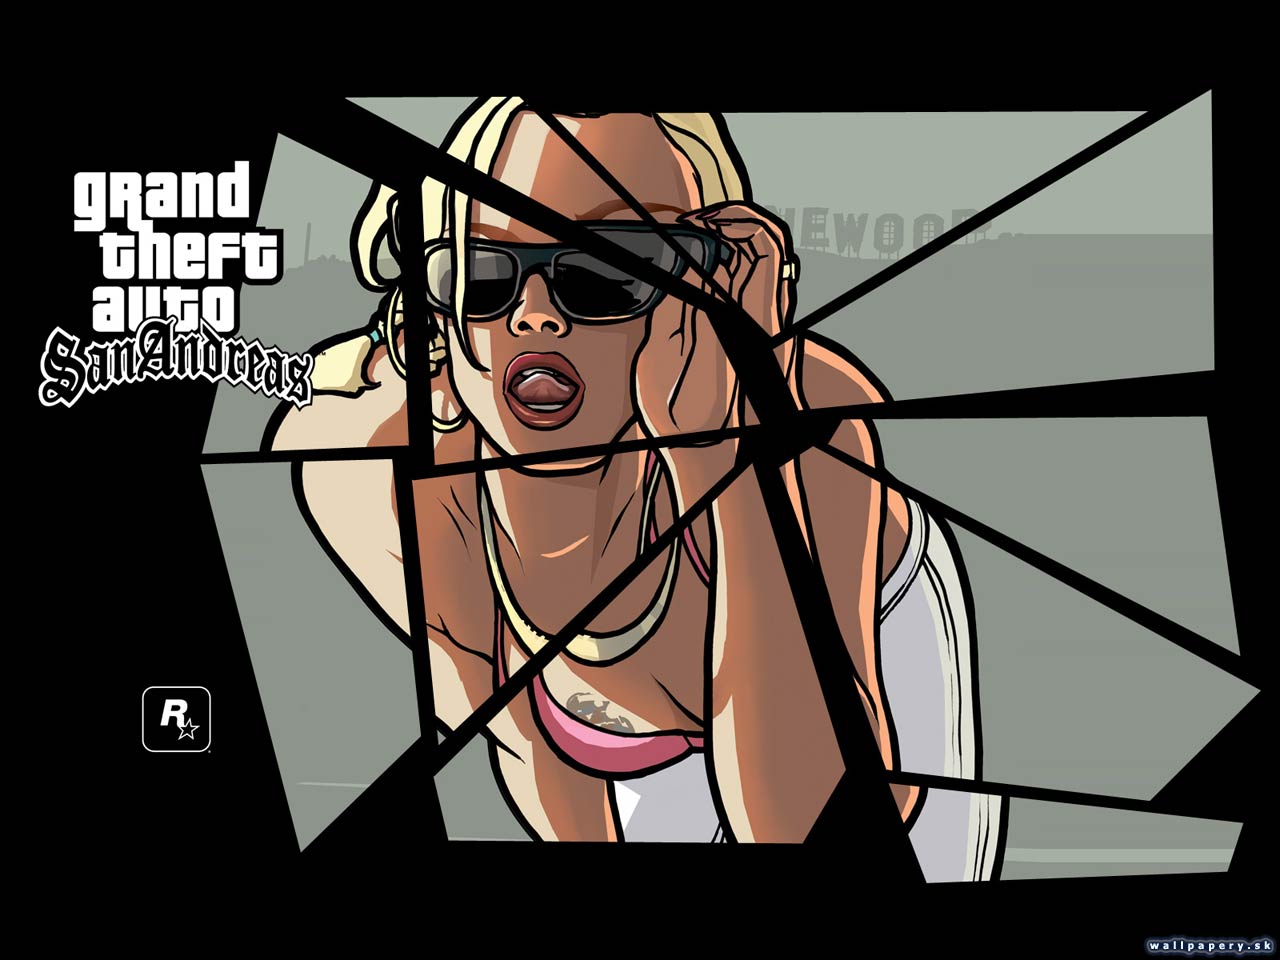 Grand Theft Auto: San Andreas - wallpaper 54